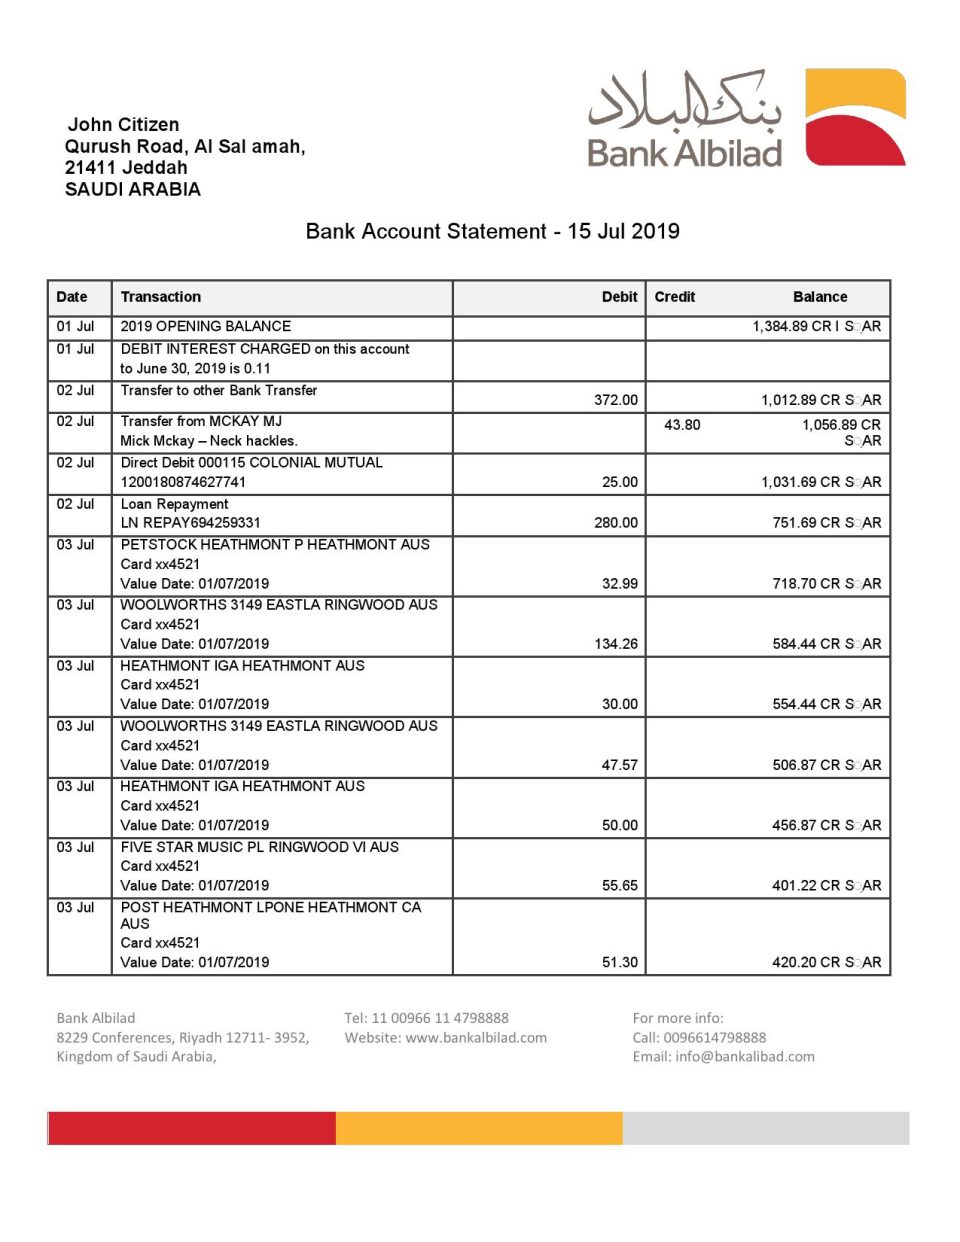 Saudi Arabia Bank Albilad bank statement template in Word and PDF format